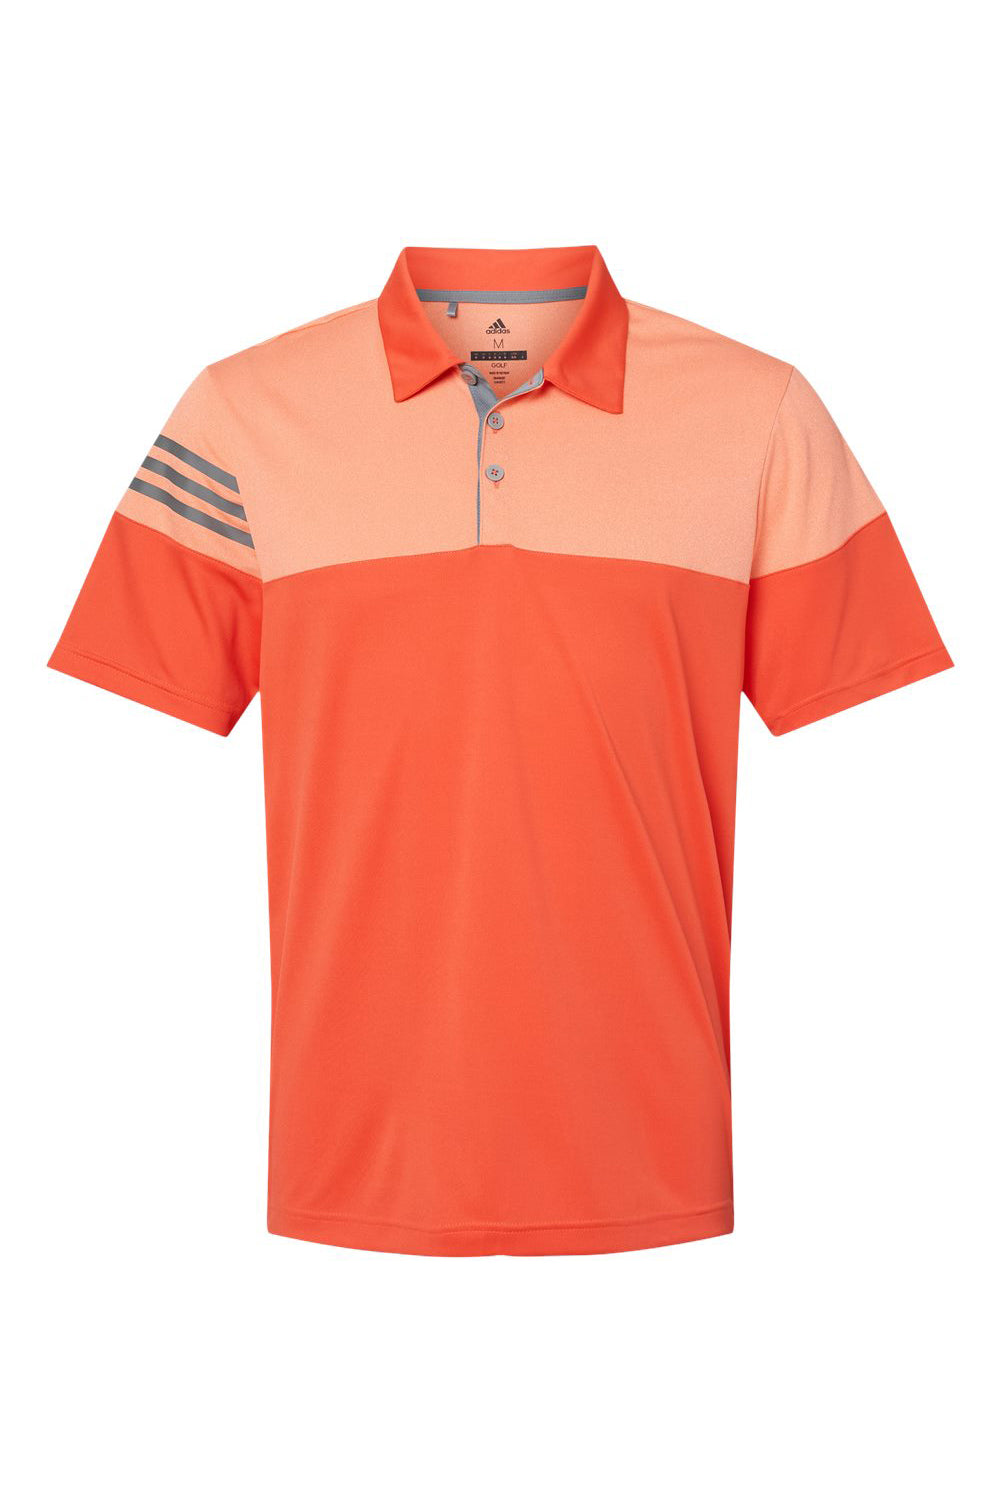 Adidas A213 Mens 3 Stripes Colorblock Moisture Wicking Short Sleeve Polo Shirt Blaze Orange/Vista Grey Flat Front